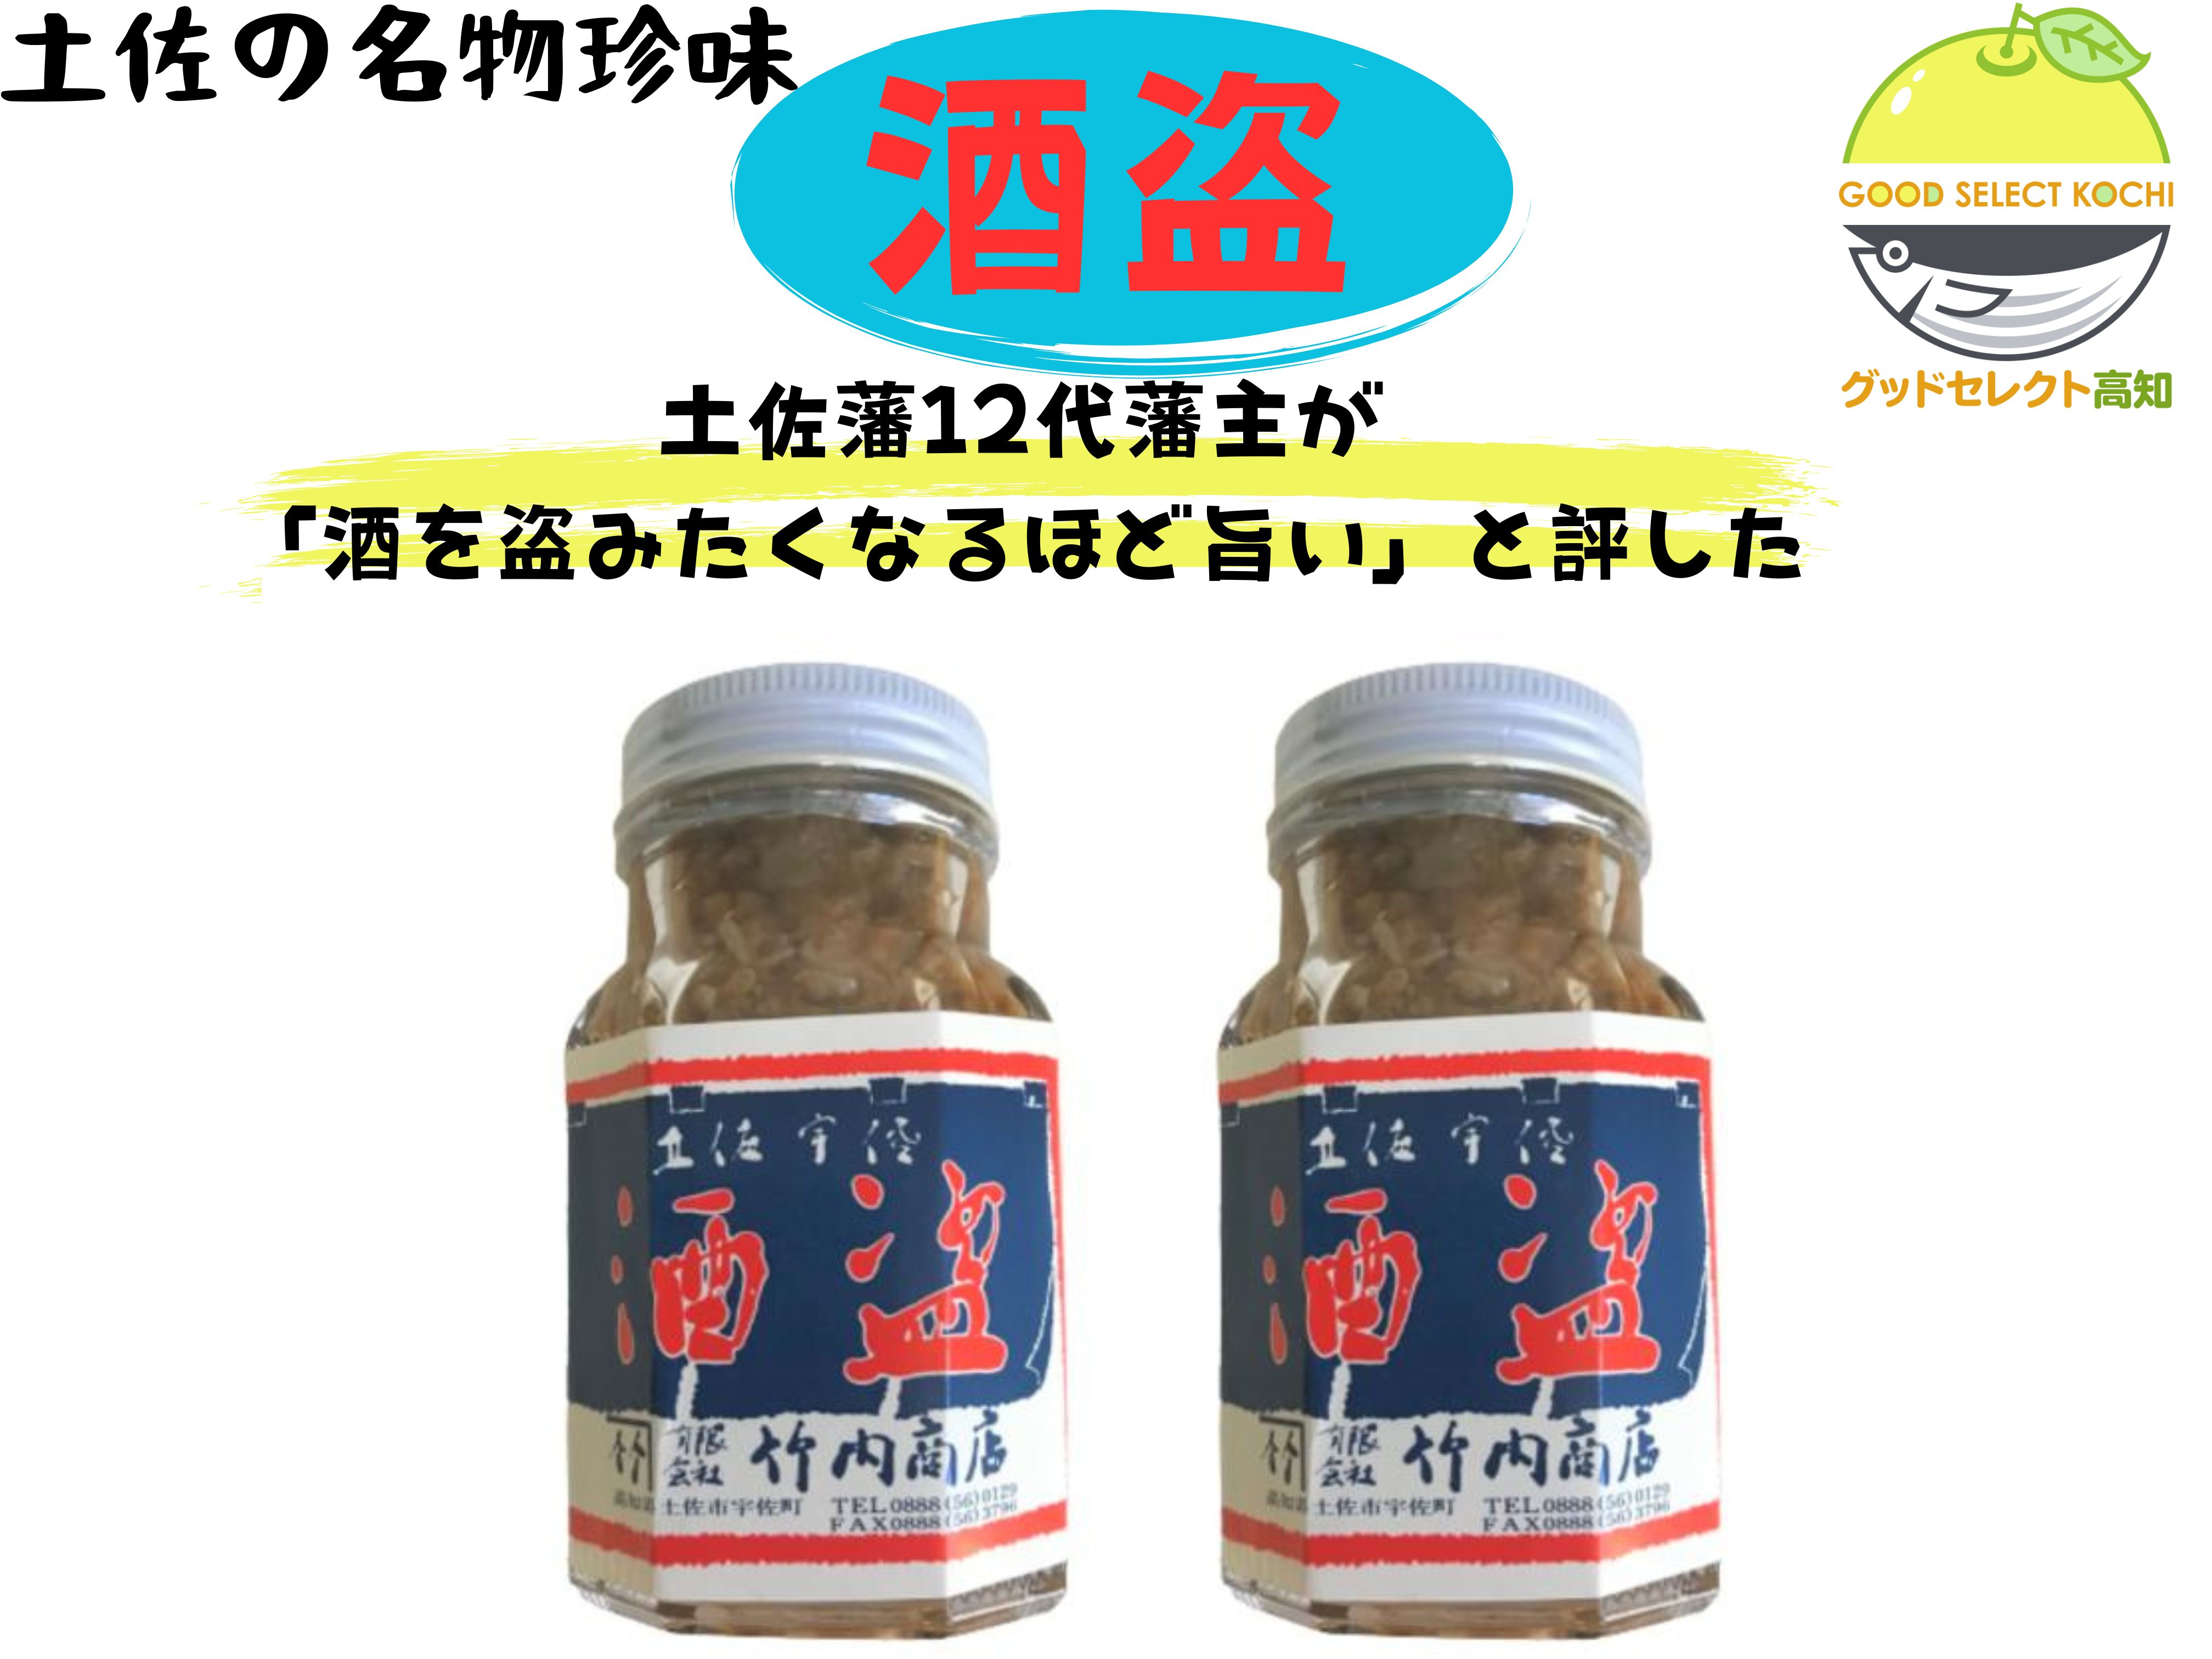  sake .160g×2 piece .. salt . Kochi special product Takeuchi shop 